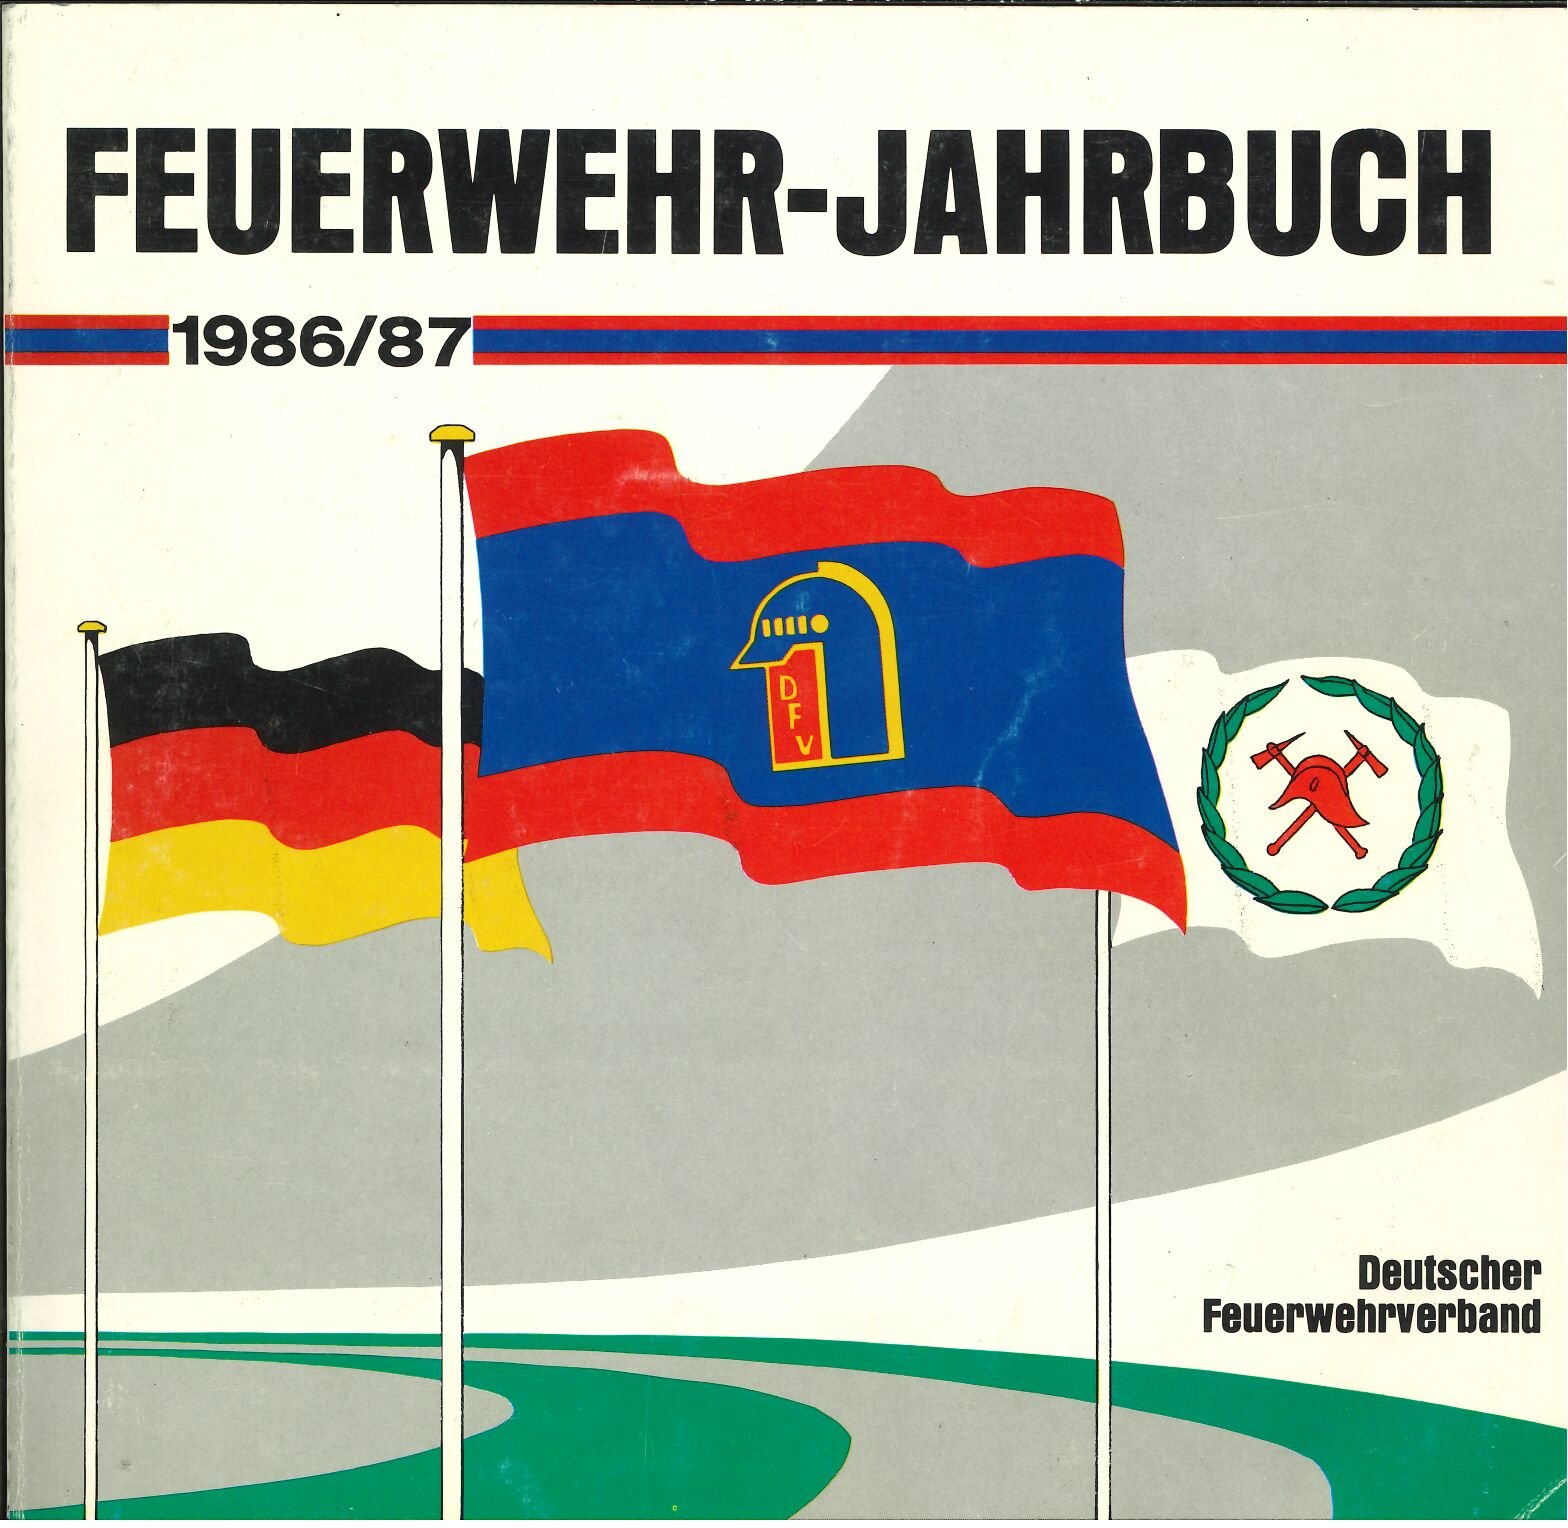 Feuerwehr-Jahrbuch 1986/87 (Feuerwehrmuseum Grethen CC BY-NC-SA)